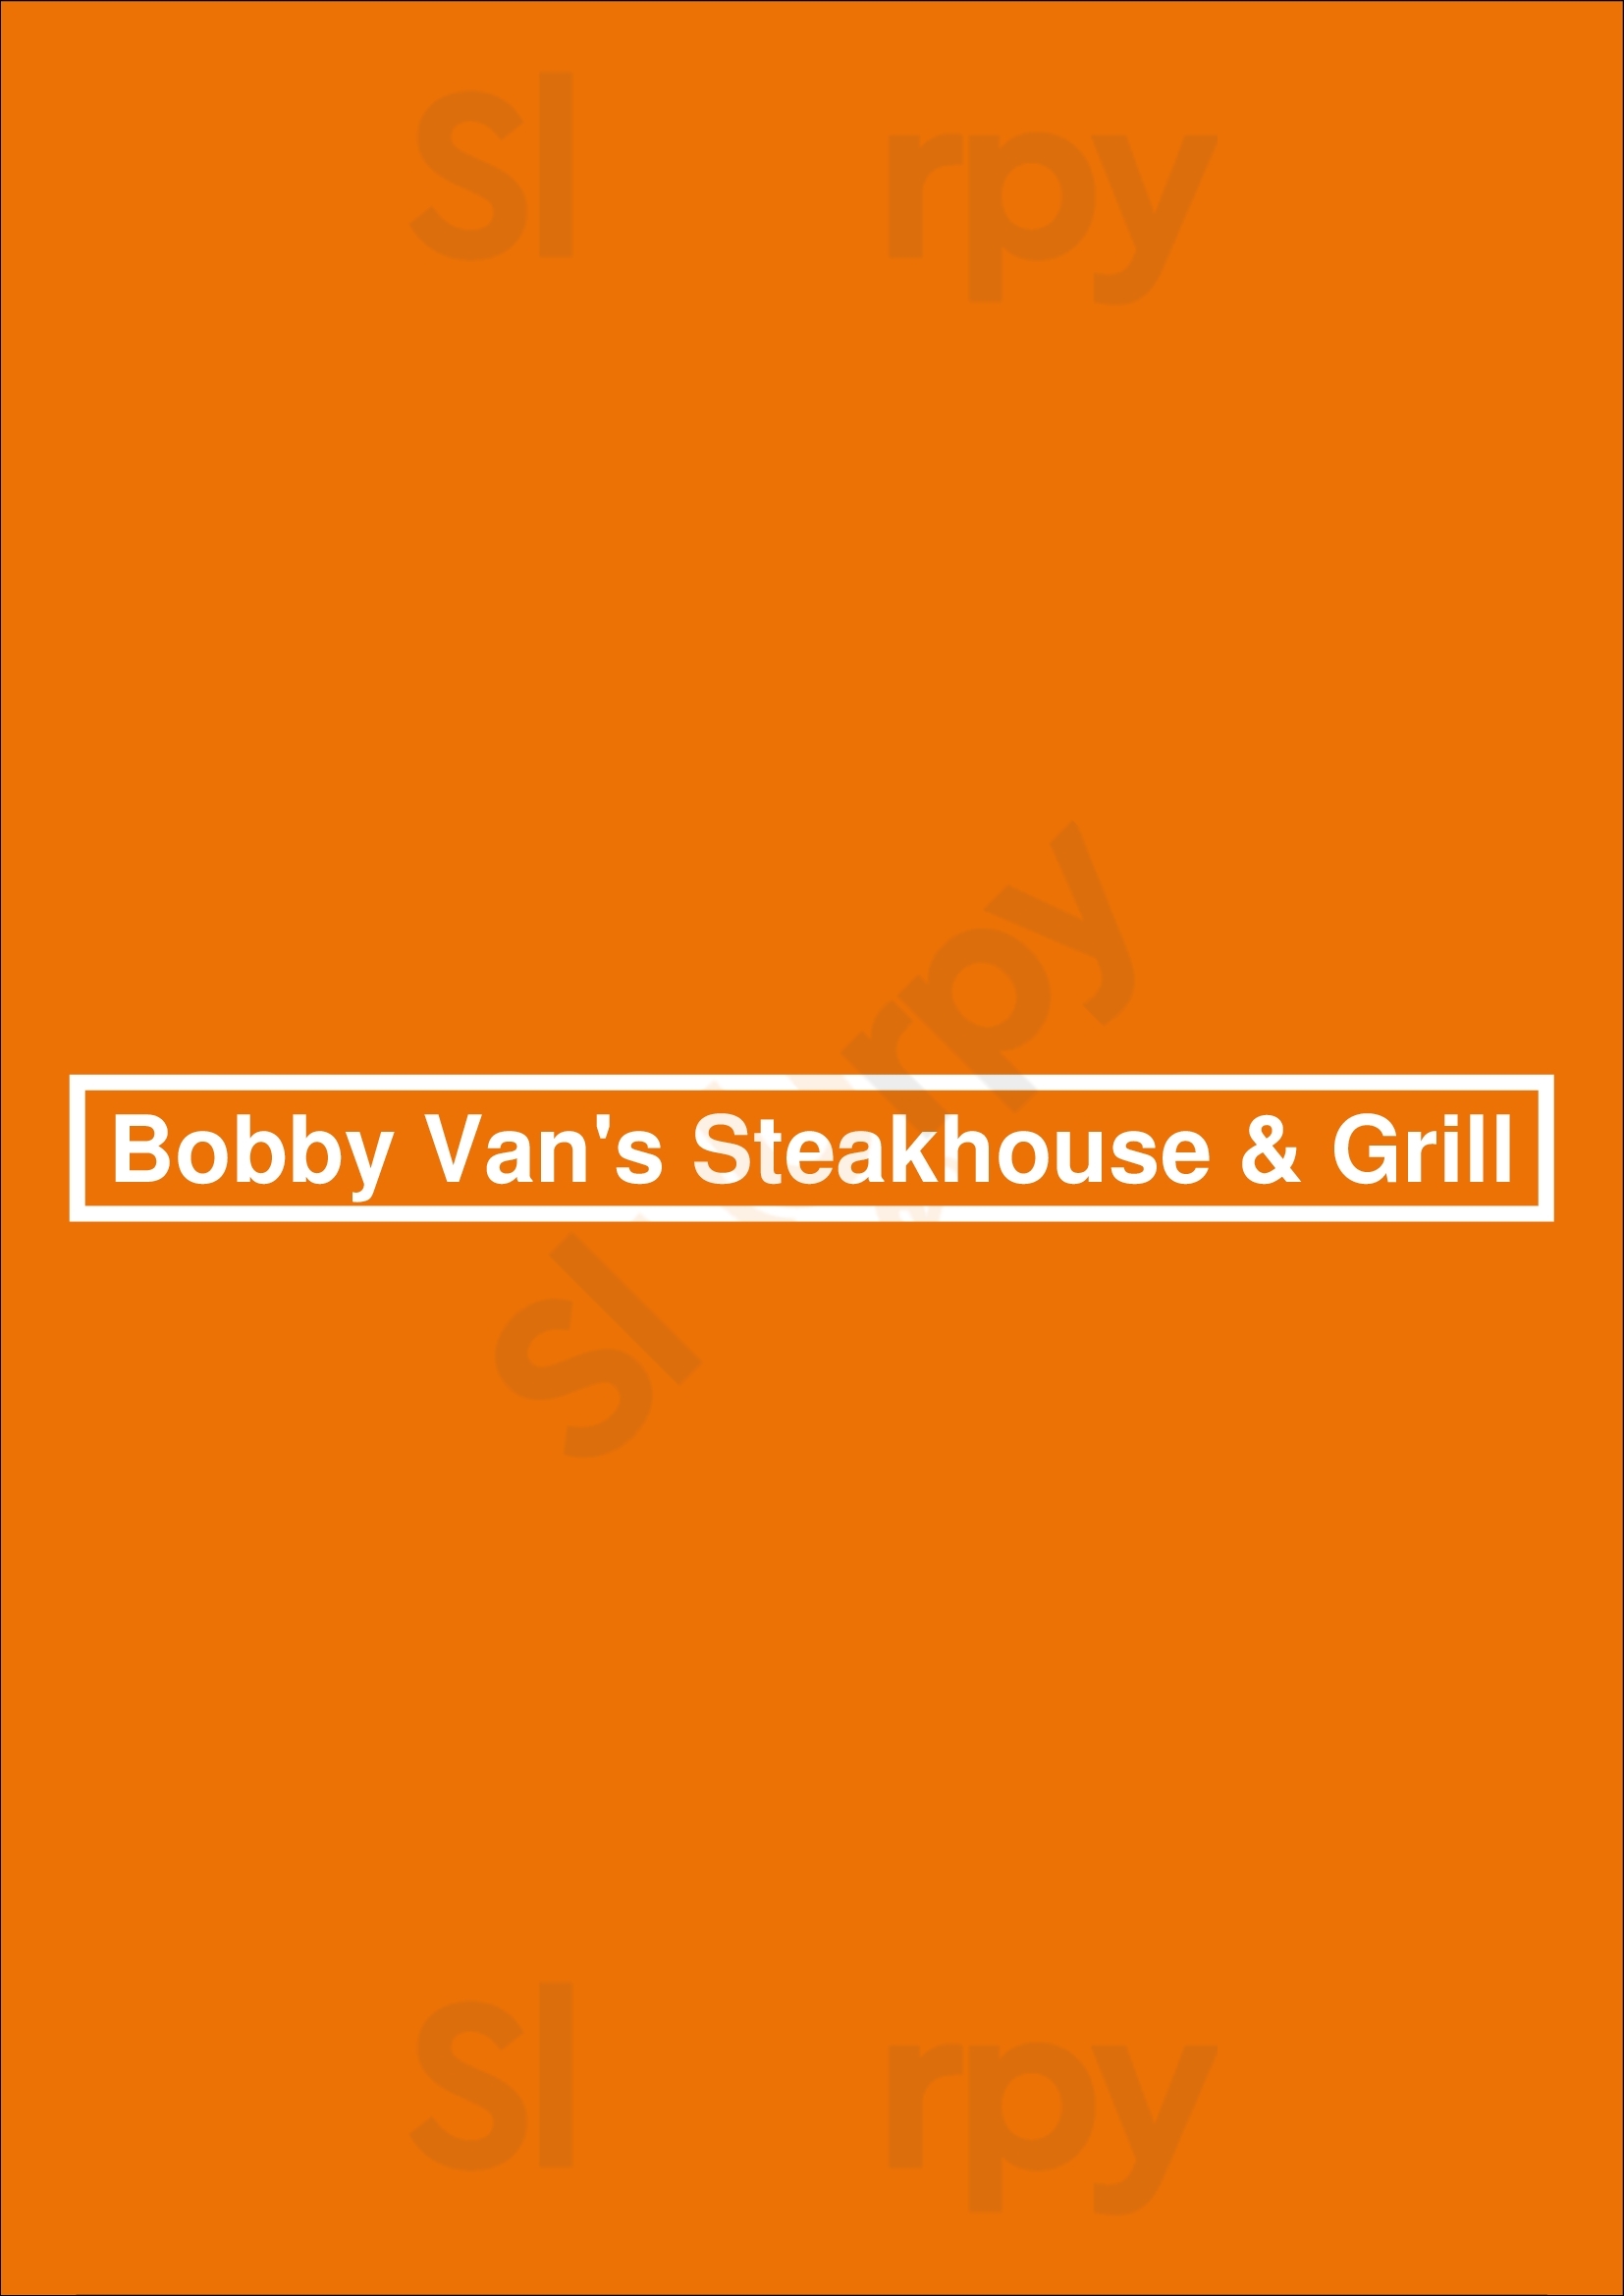 Bobby Van's Steakhouse & Grill New York City Menu - 1